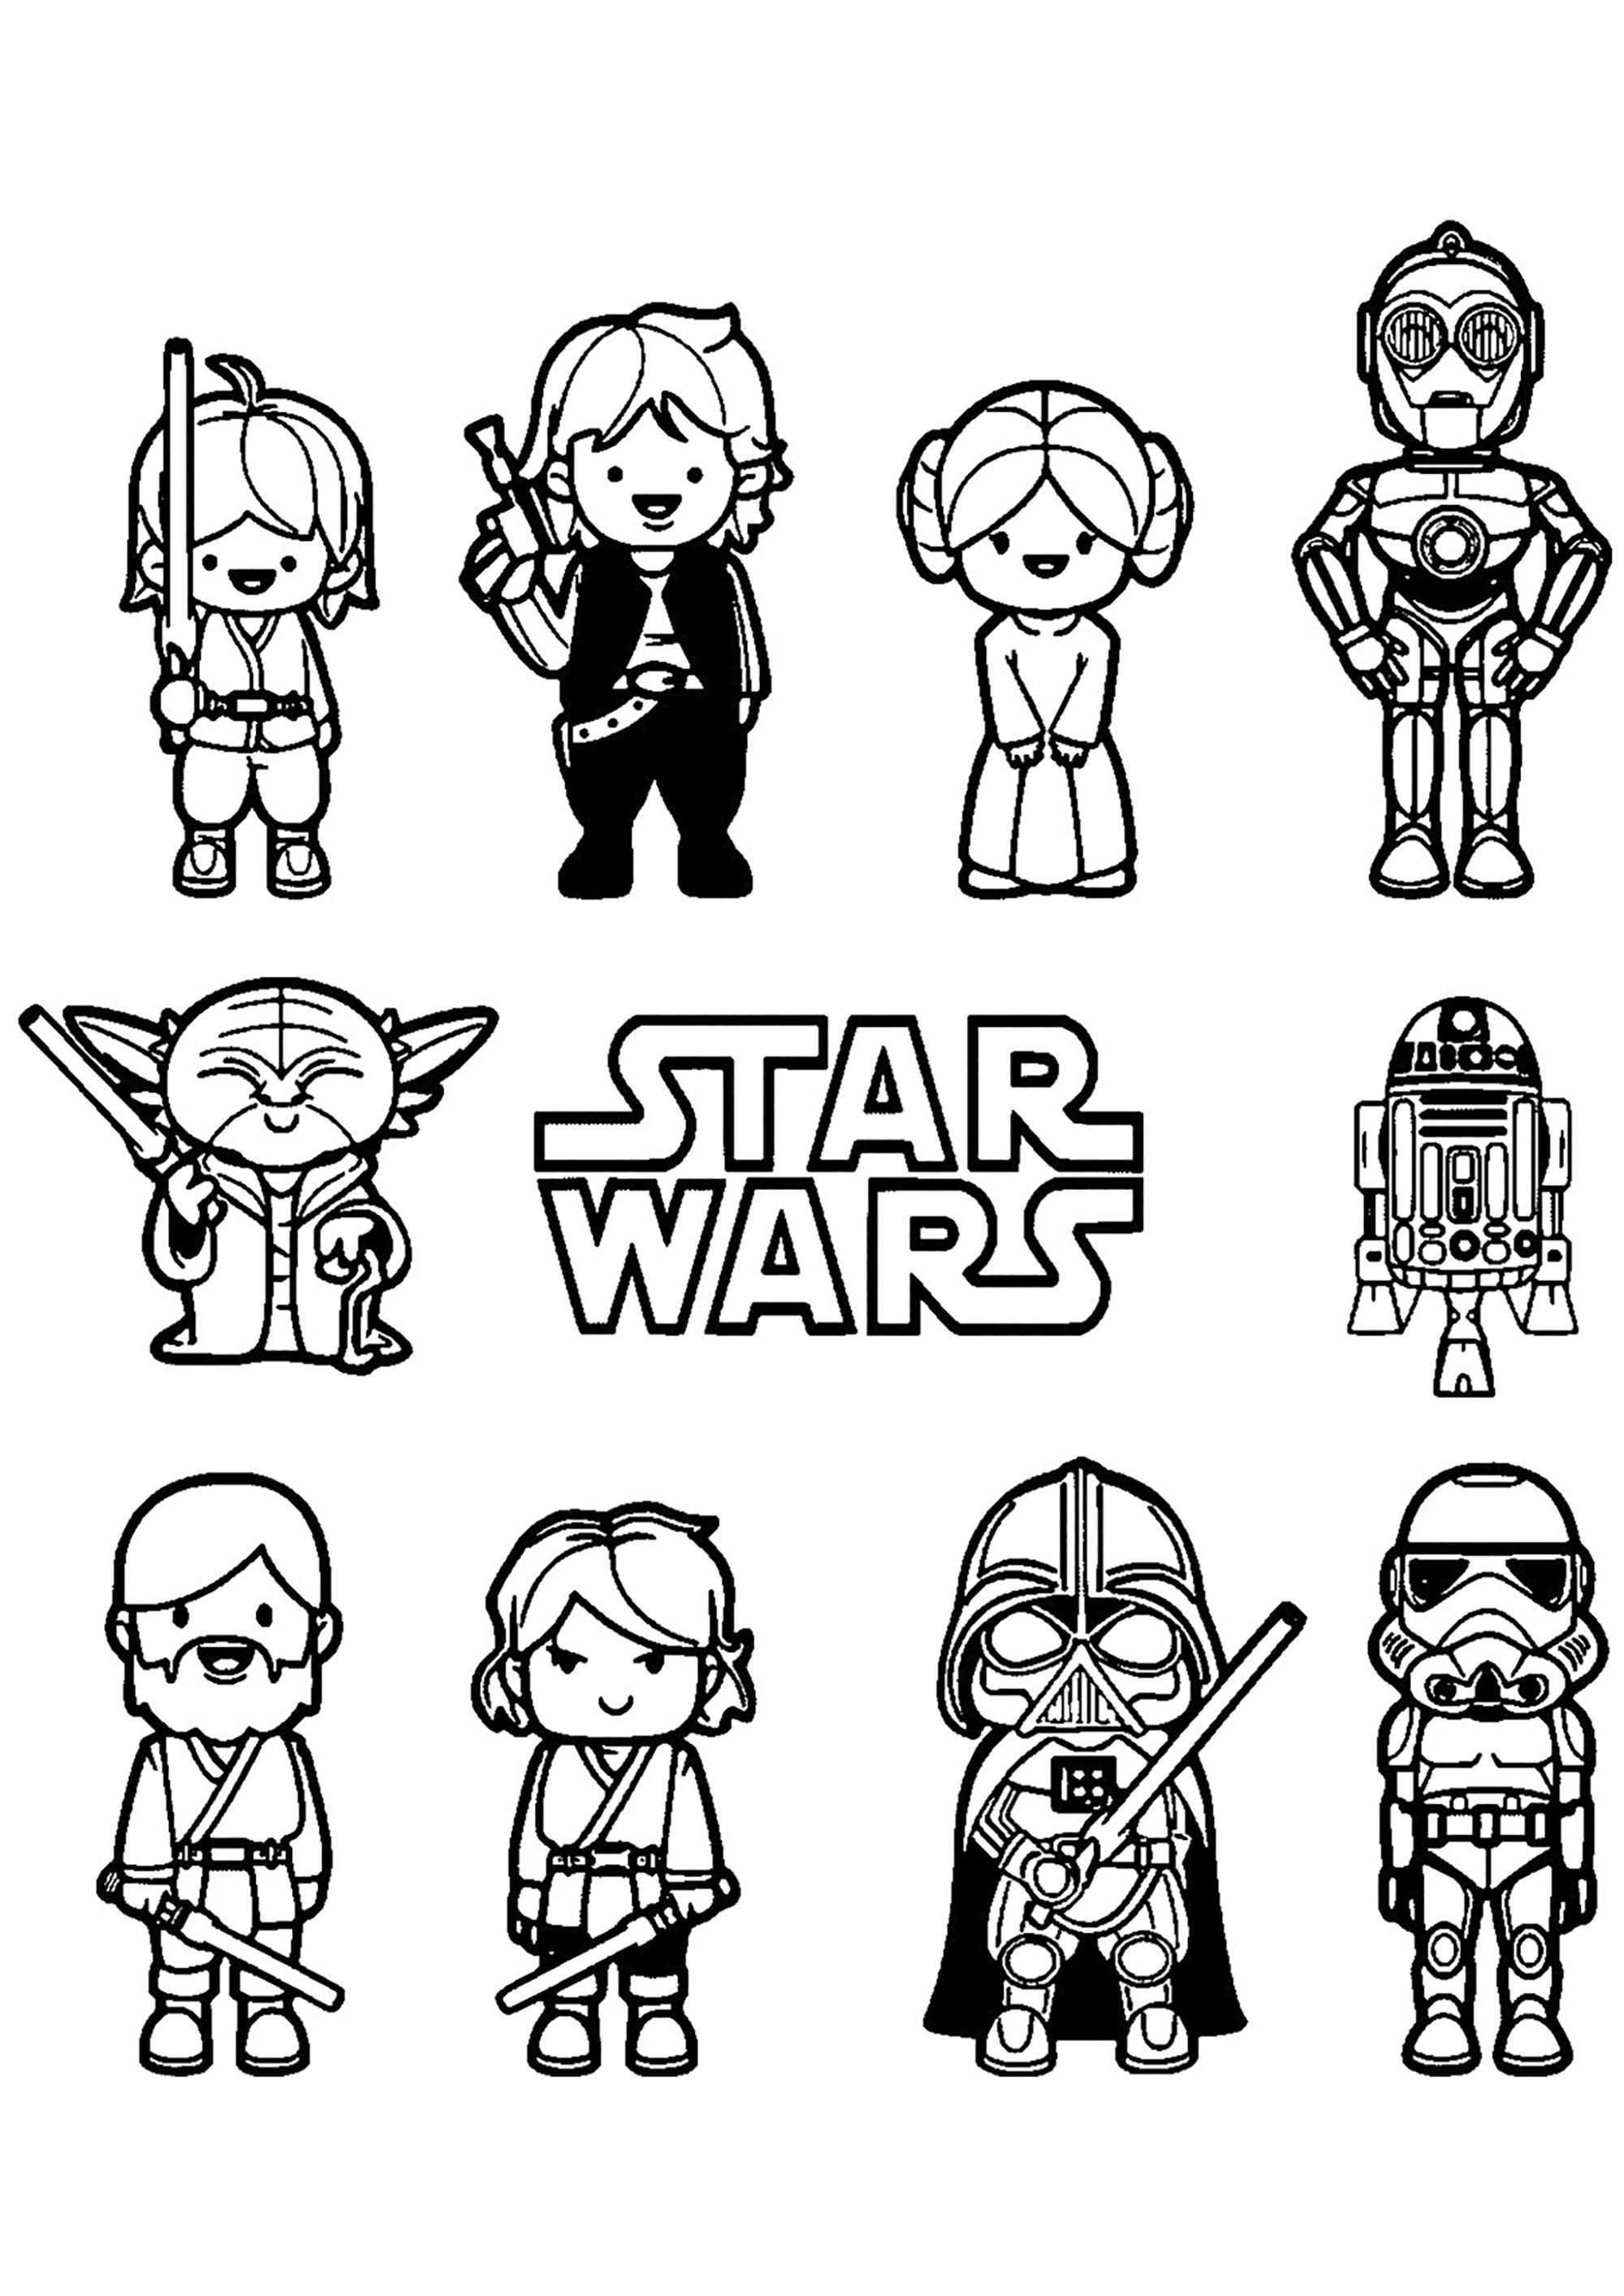 16 Coloring Page Star Wars Star Wars Coloring Book Star Wars Colors Star Wars Colorin